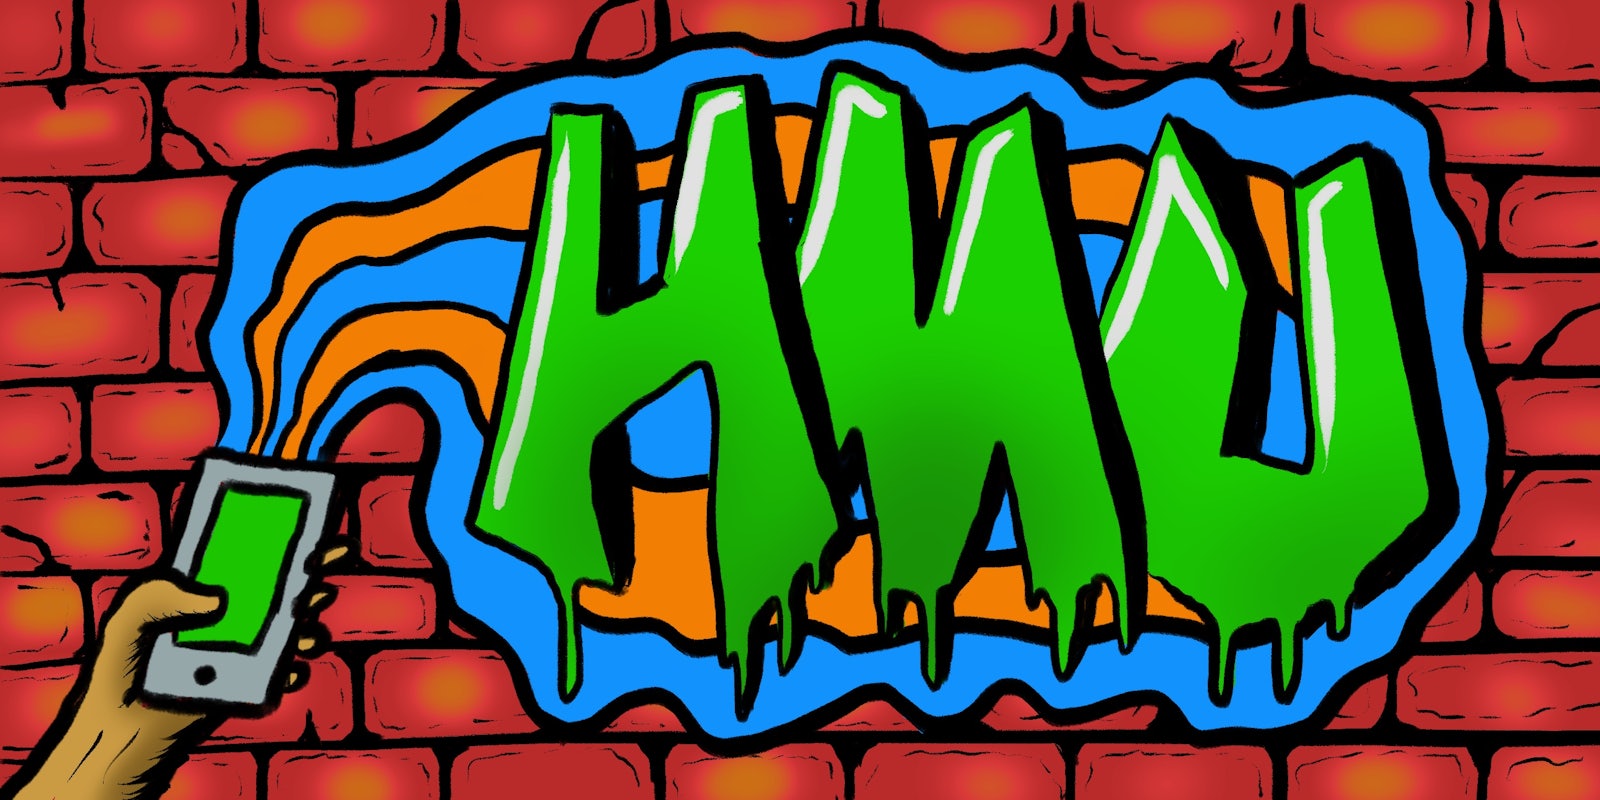 'HMU' written in green graffiti type on a brick wall